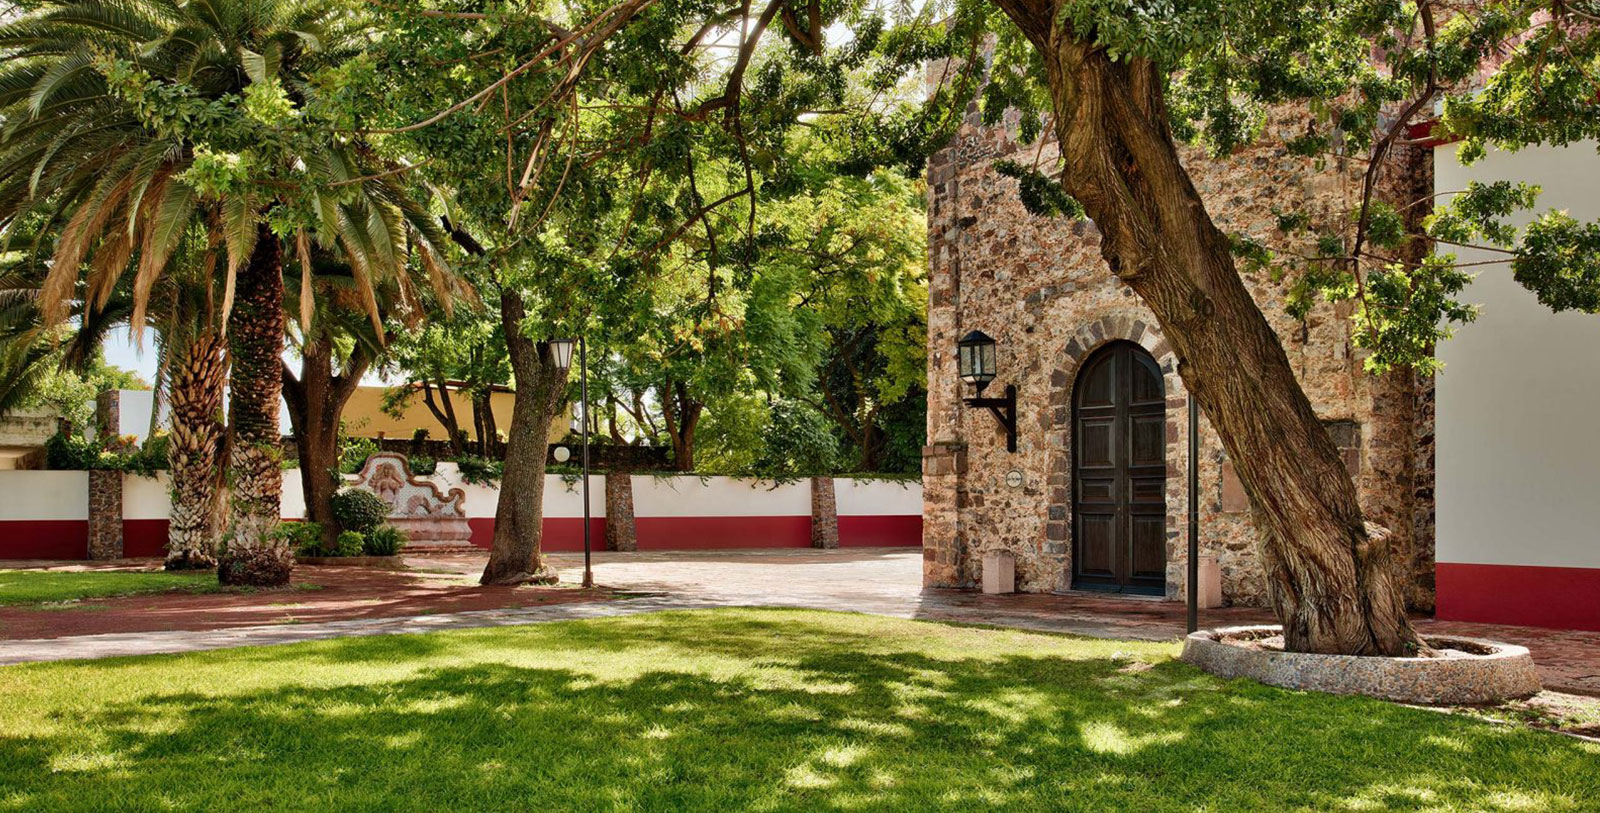 Experience the historic Plaza de Aramas Querétaro and the Cerro de las Campanas nearby.